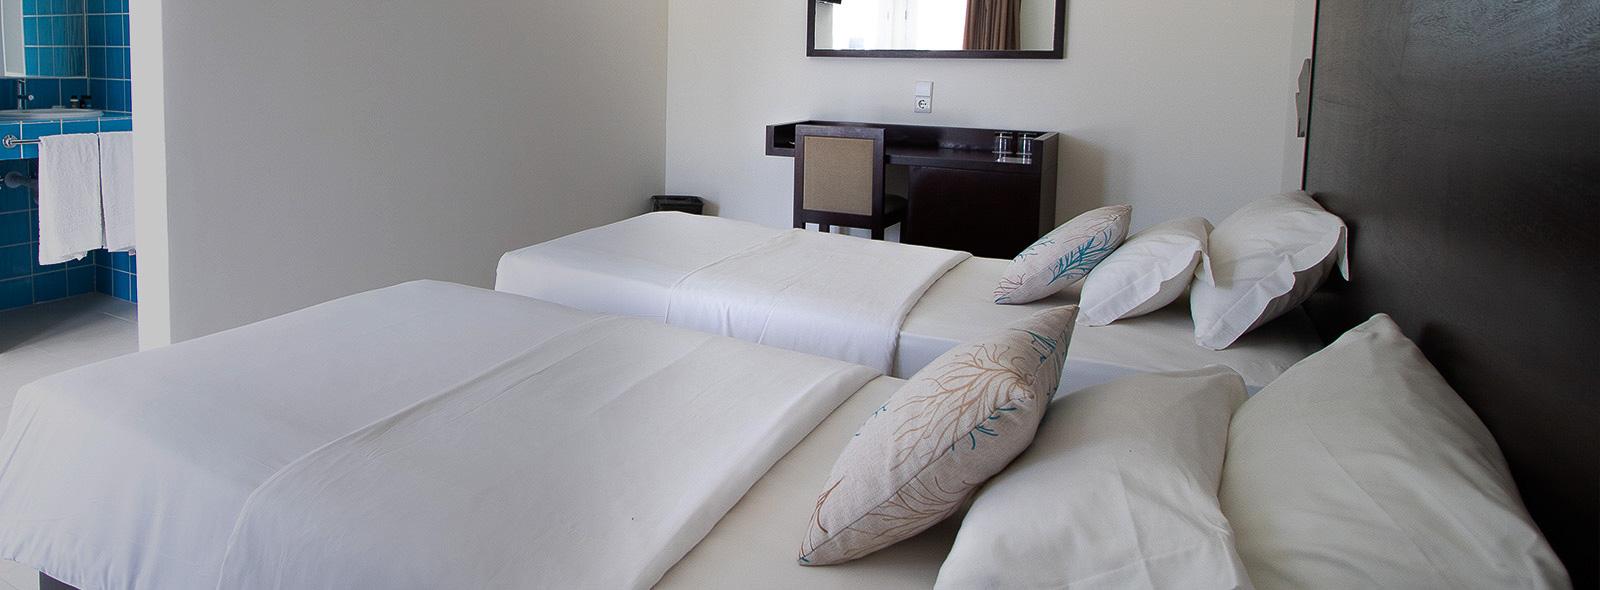 Chambre avec lits doubles de l'hébergement Dunas de Sal à Santa Maria au Cap Vert